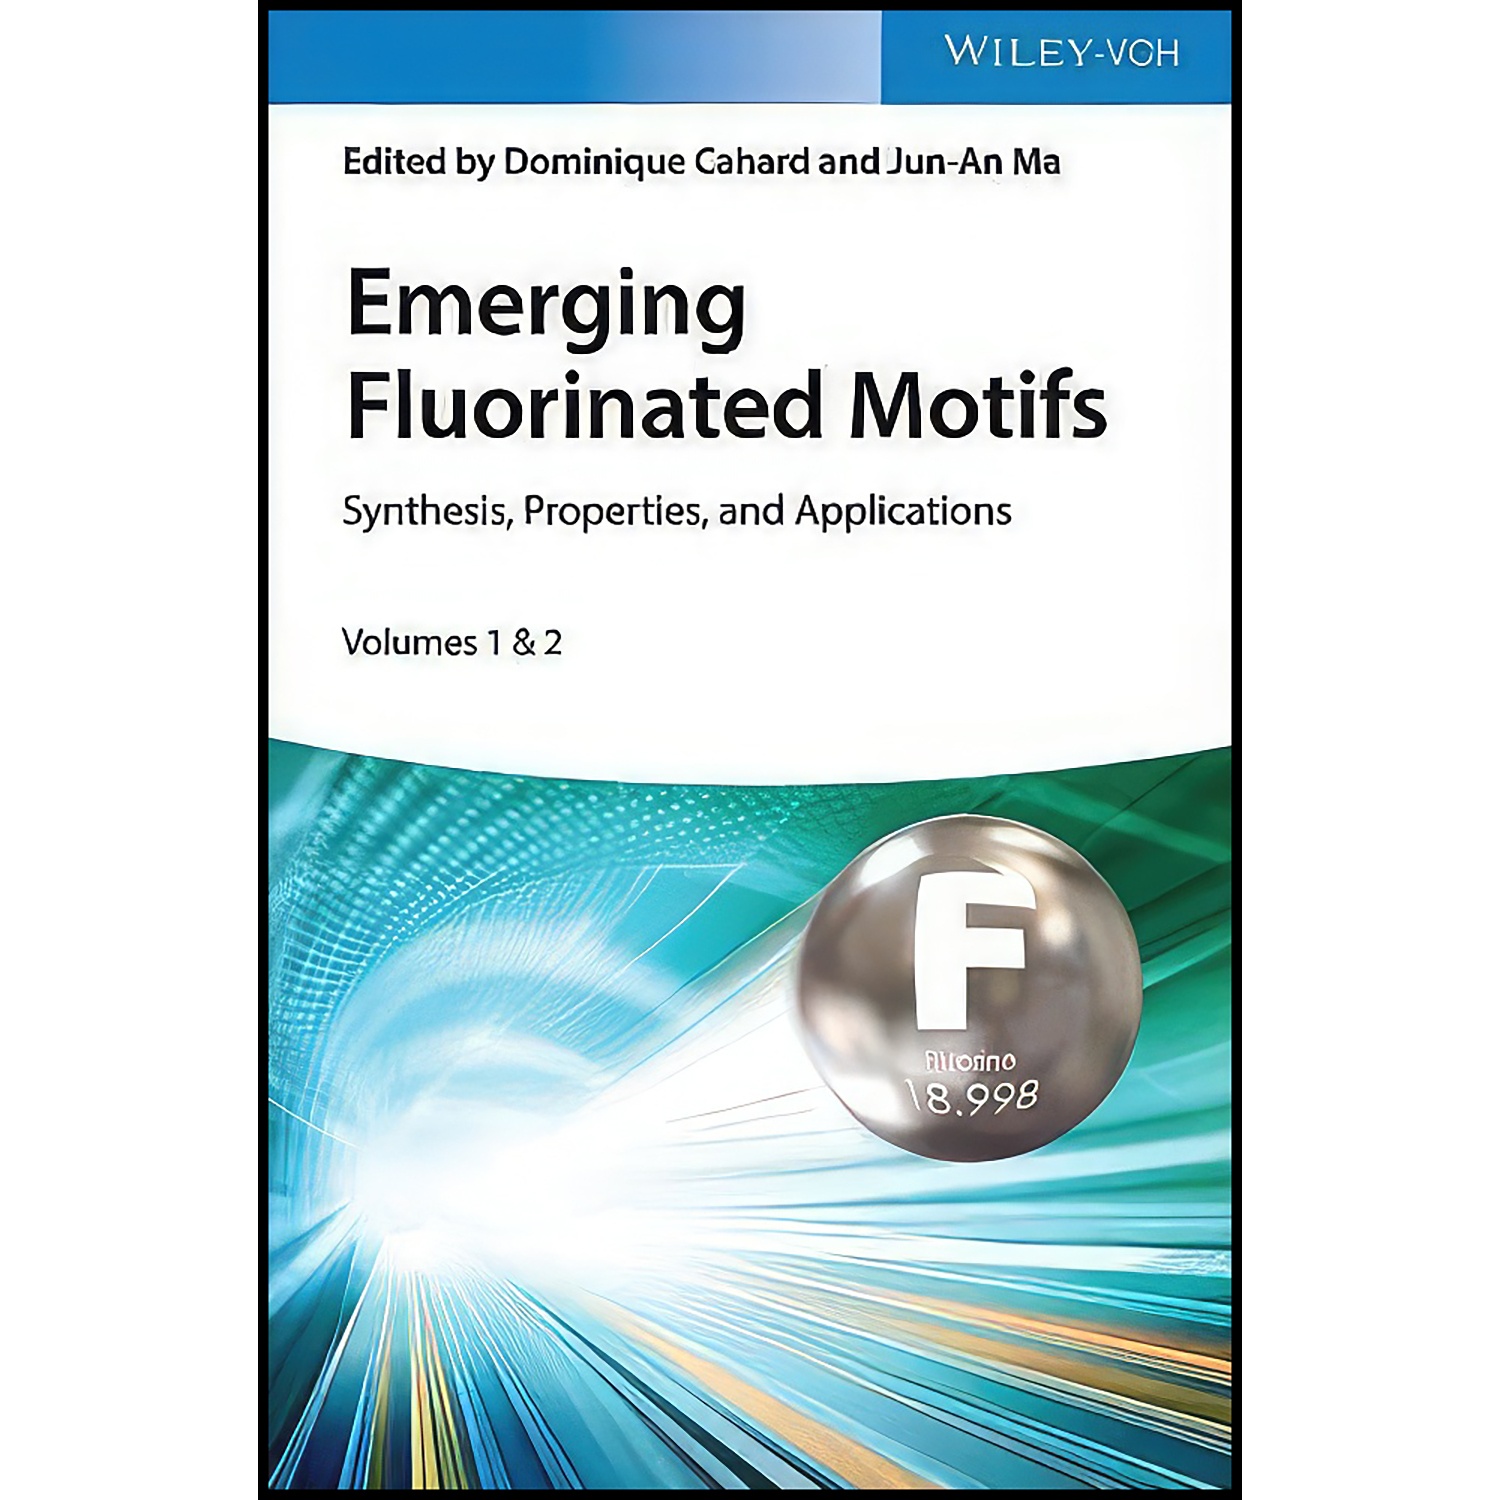 کتاب Emerging Fluorinated Motifs اثر Dominique Cahard and Jun-An Ma انتشارات Wiley-VCH